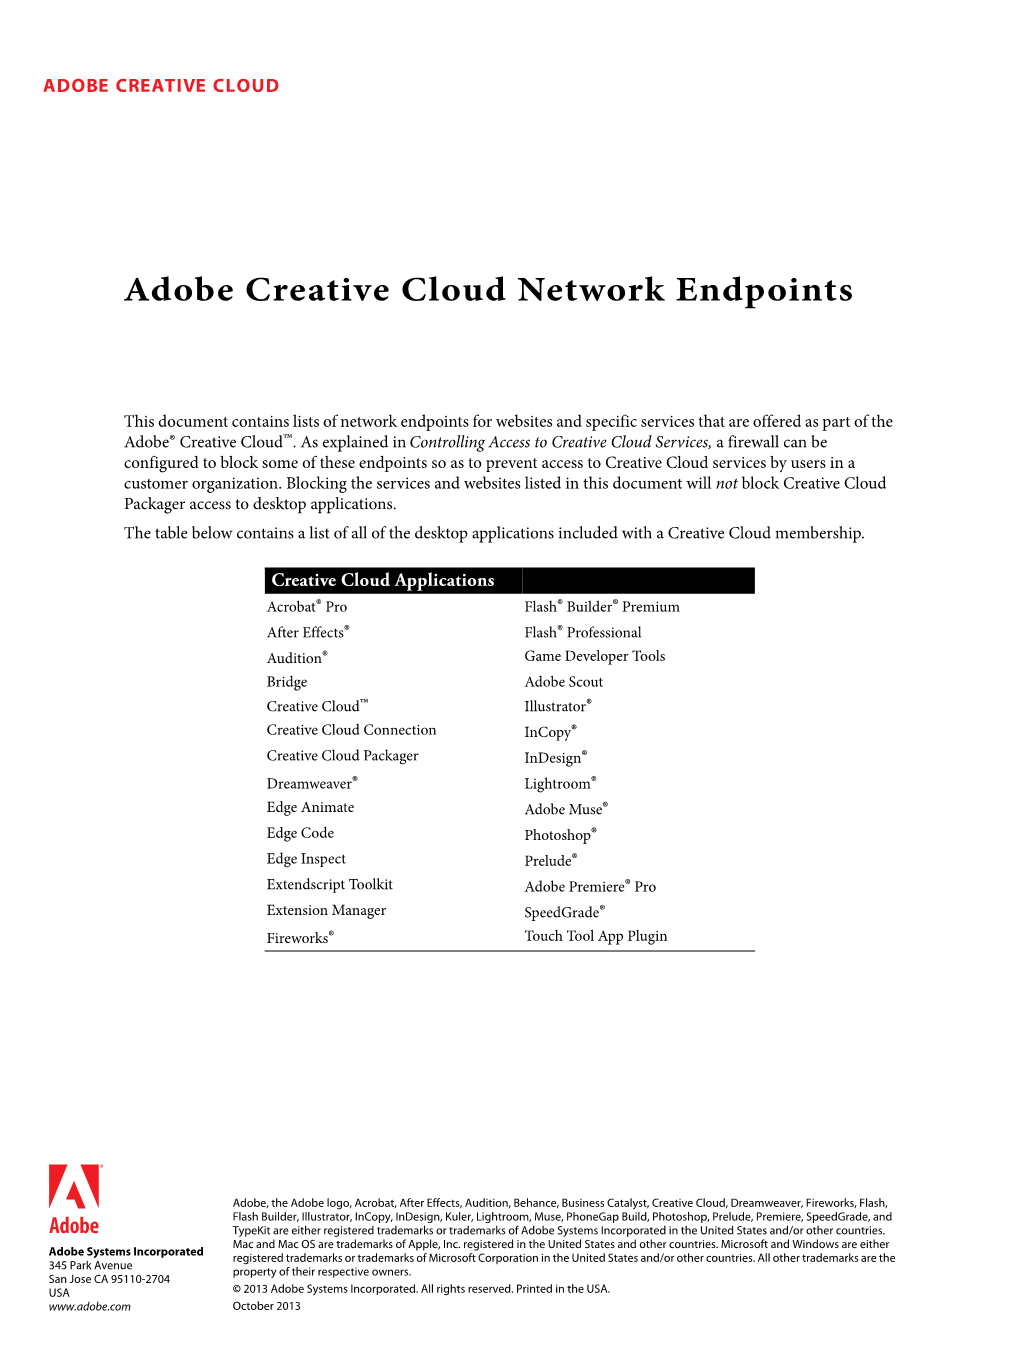 Creative Cloud Network Endpoints